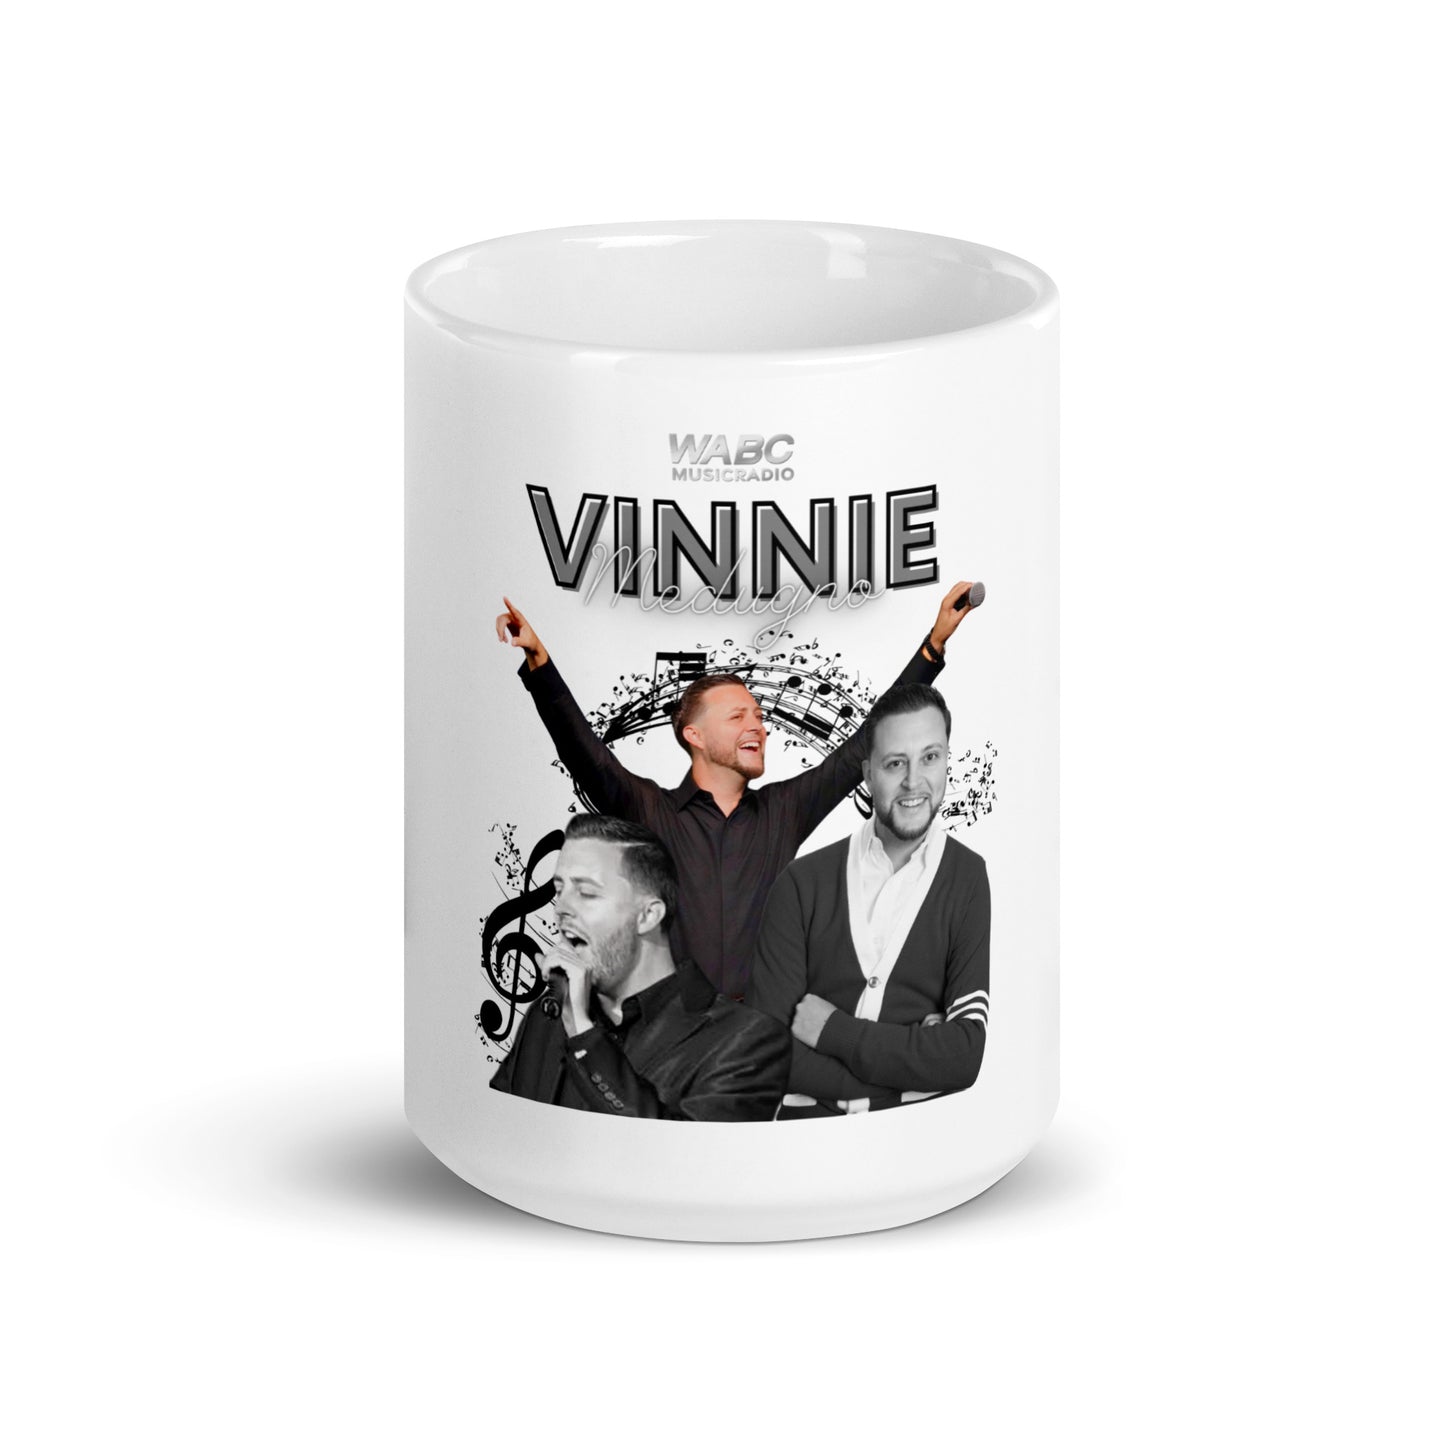 Vinnie Medugno White glossy mug